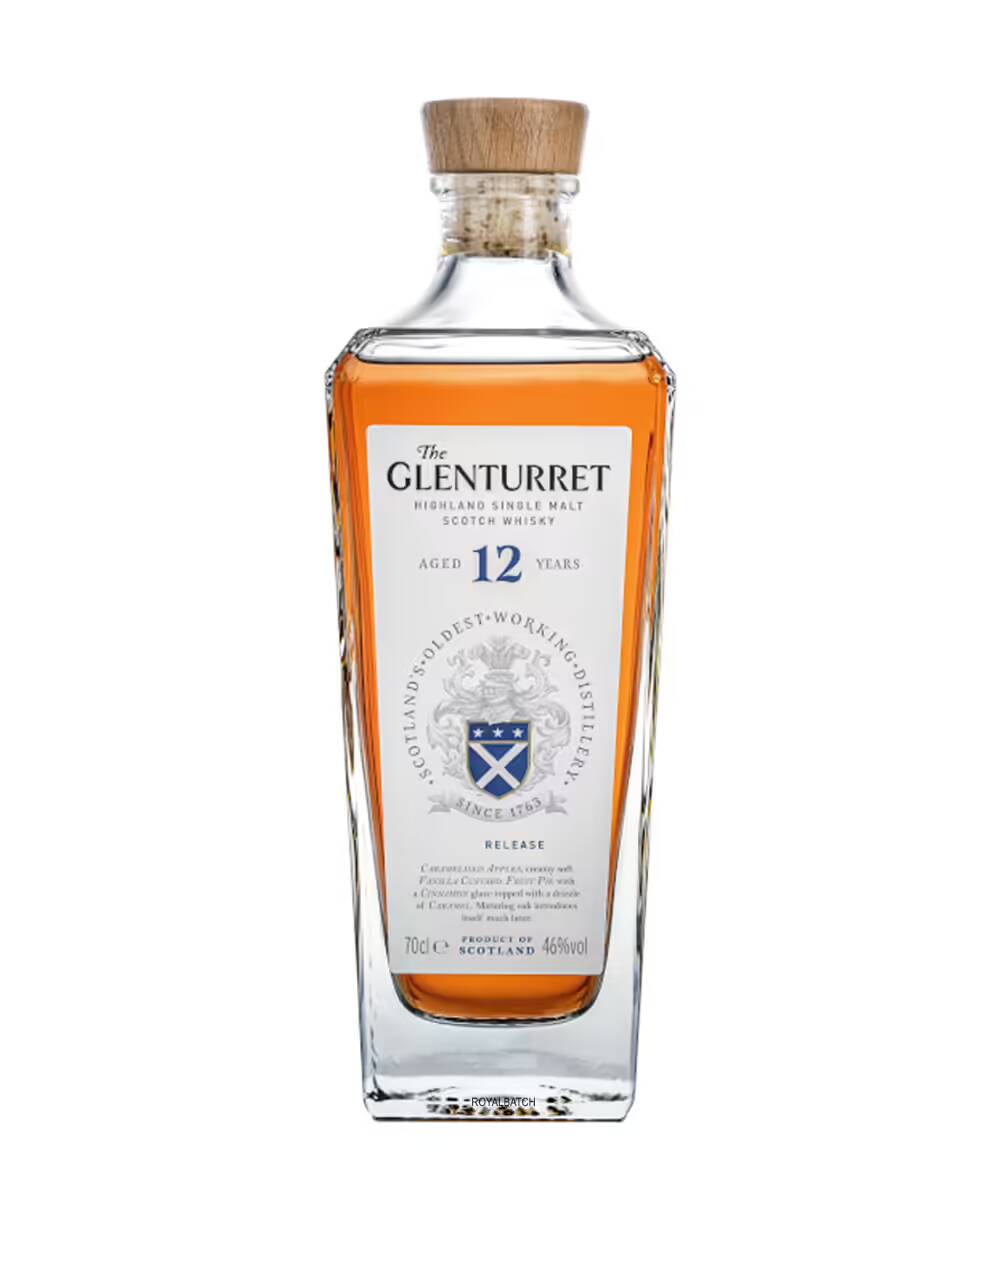 The Glenturret 12 Year Old Single Malt Scotch Whisky